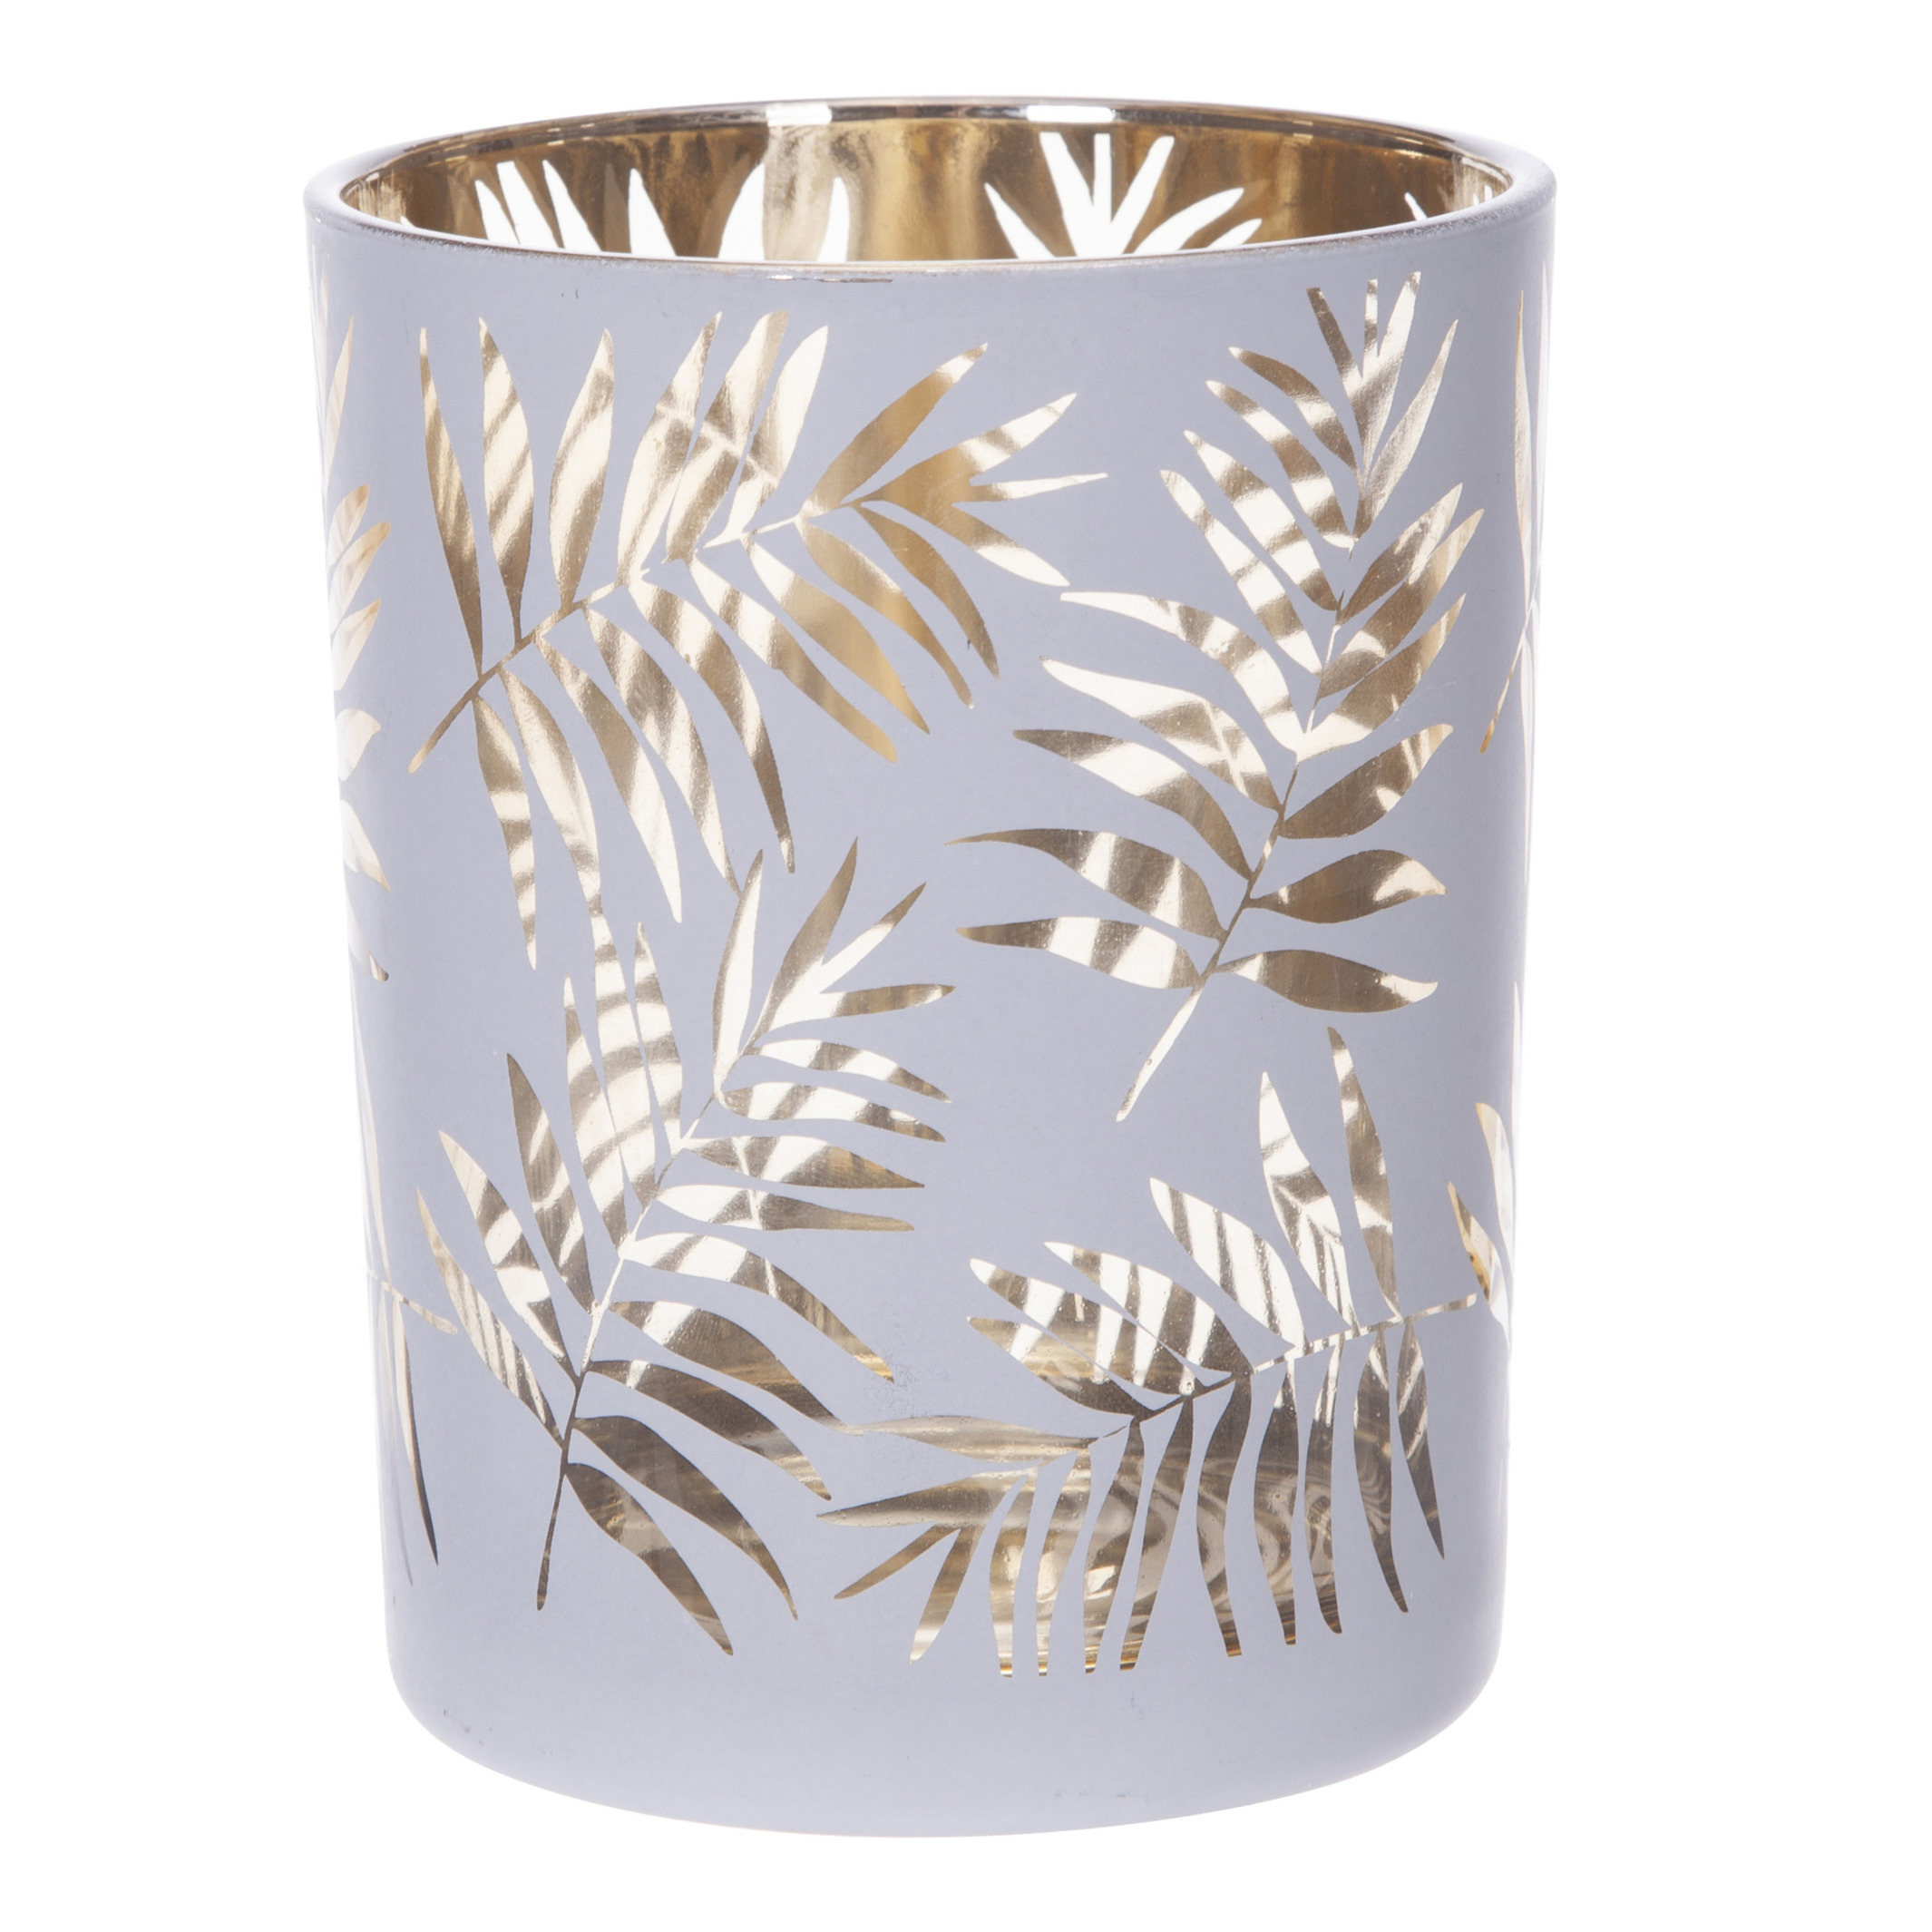 Theelichthouders-waxinelichthouders glas wit-goud bladeren print 12,5 cm